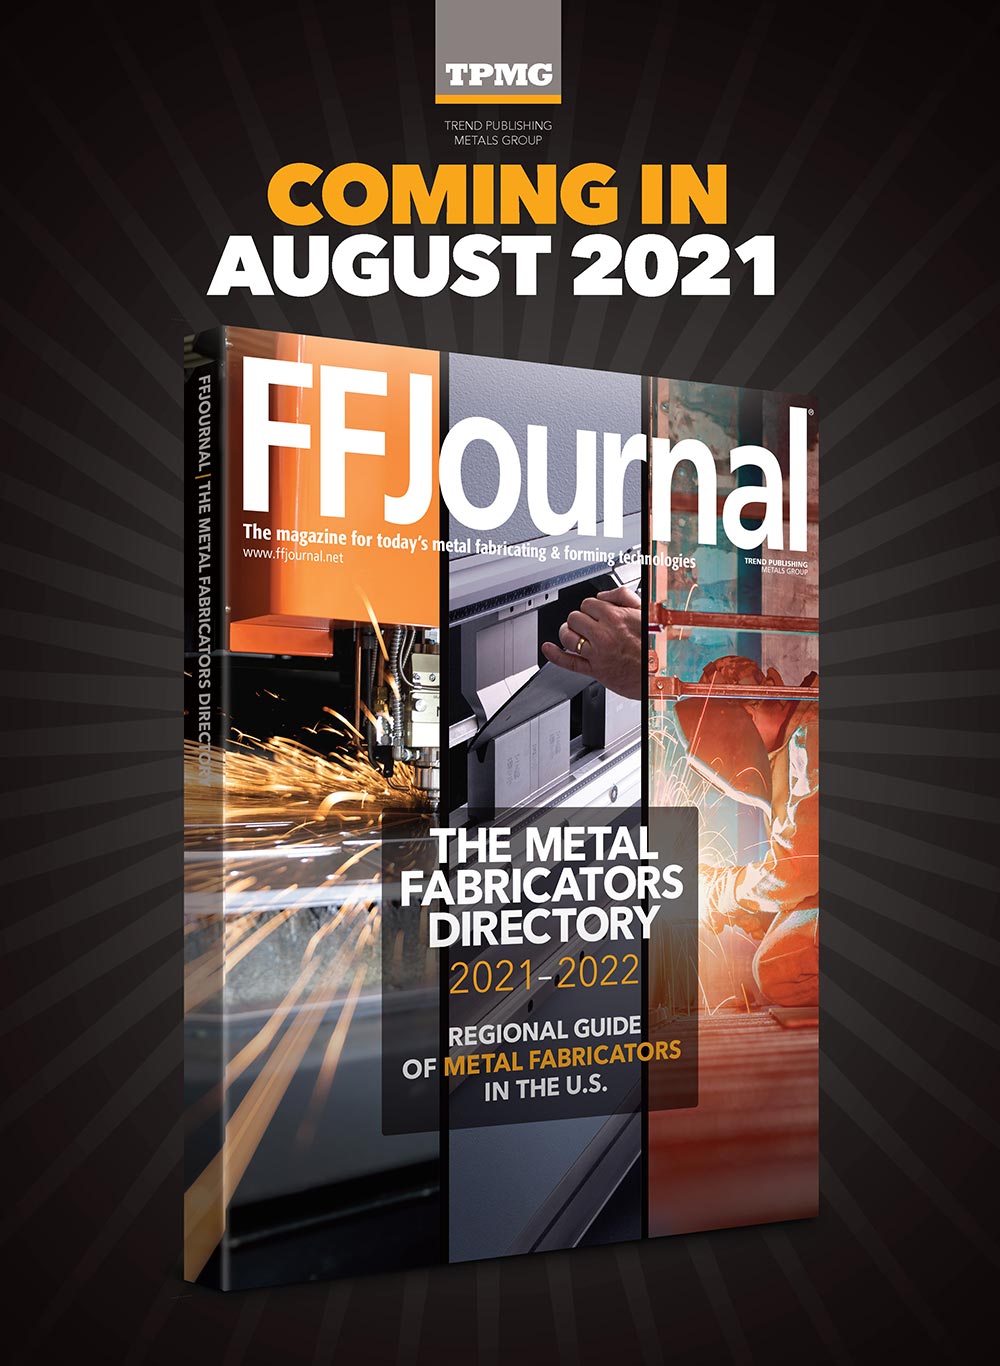 FF Journal The Metal Fabricators Directory 2021-2022 Advertisement